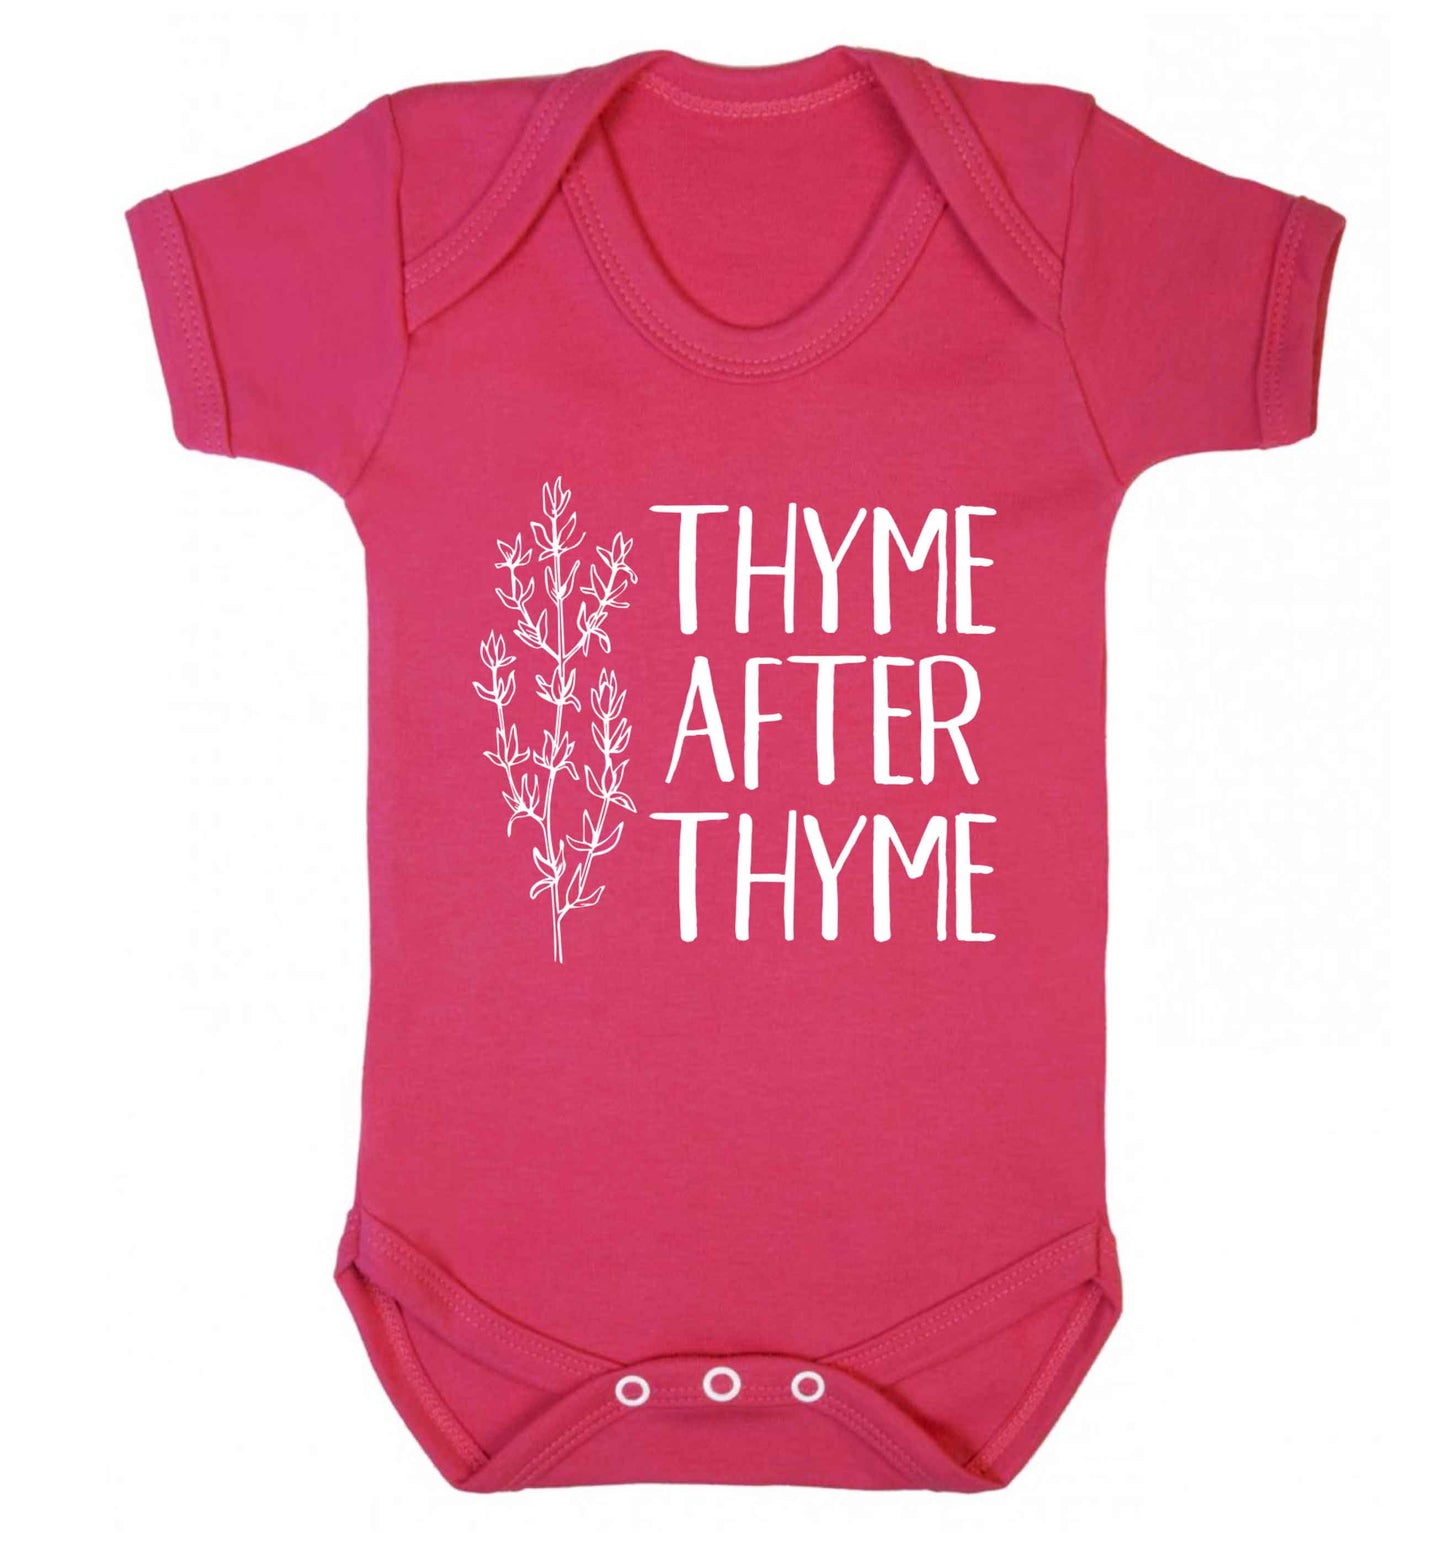 Thyme after thyme Baby Vest dark pink 18-24 months